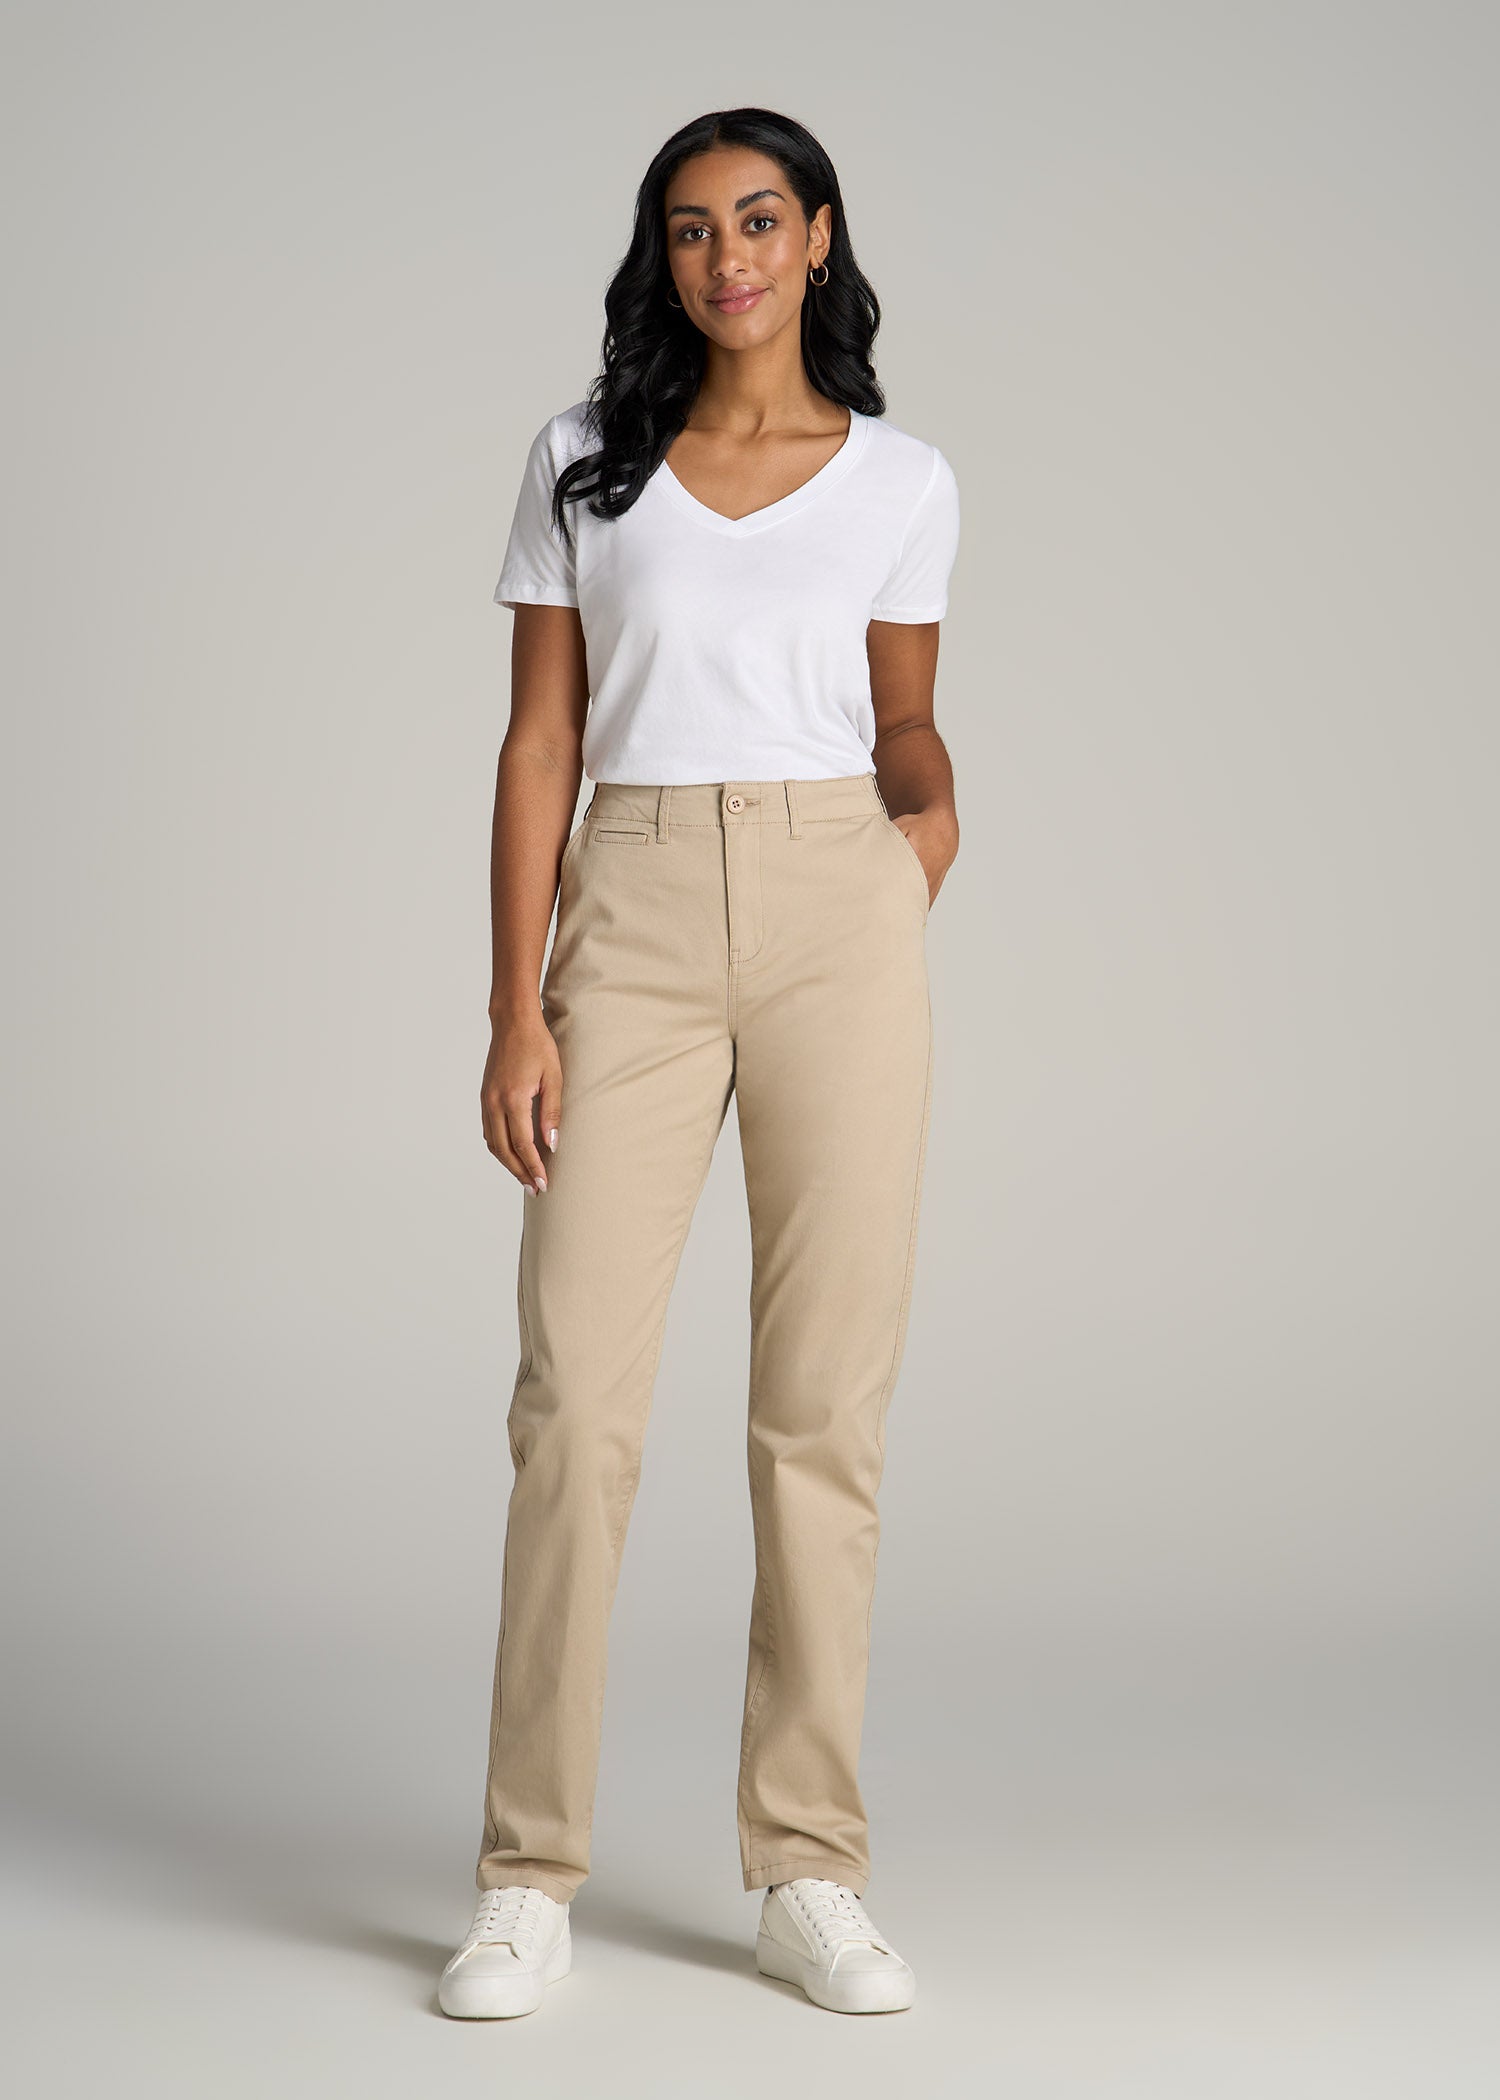 Women's Chino & Khaki Pants